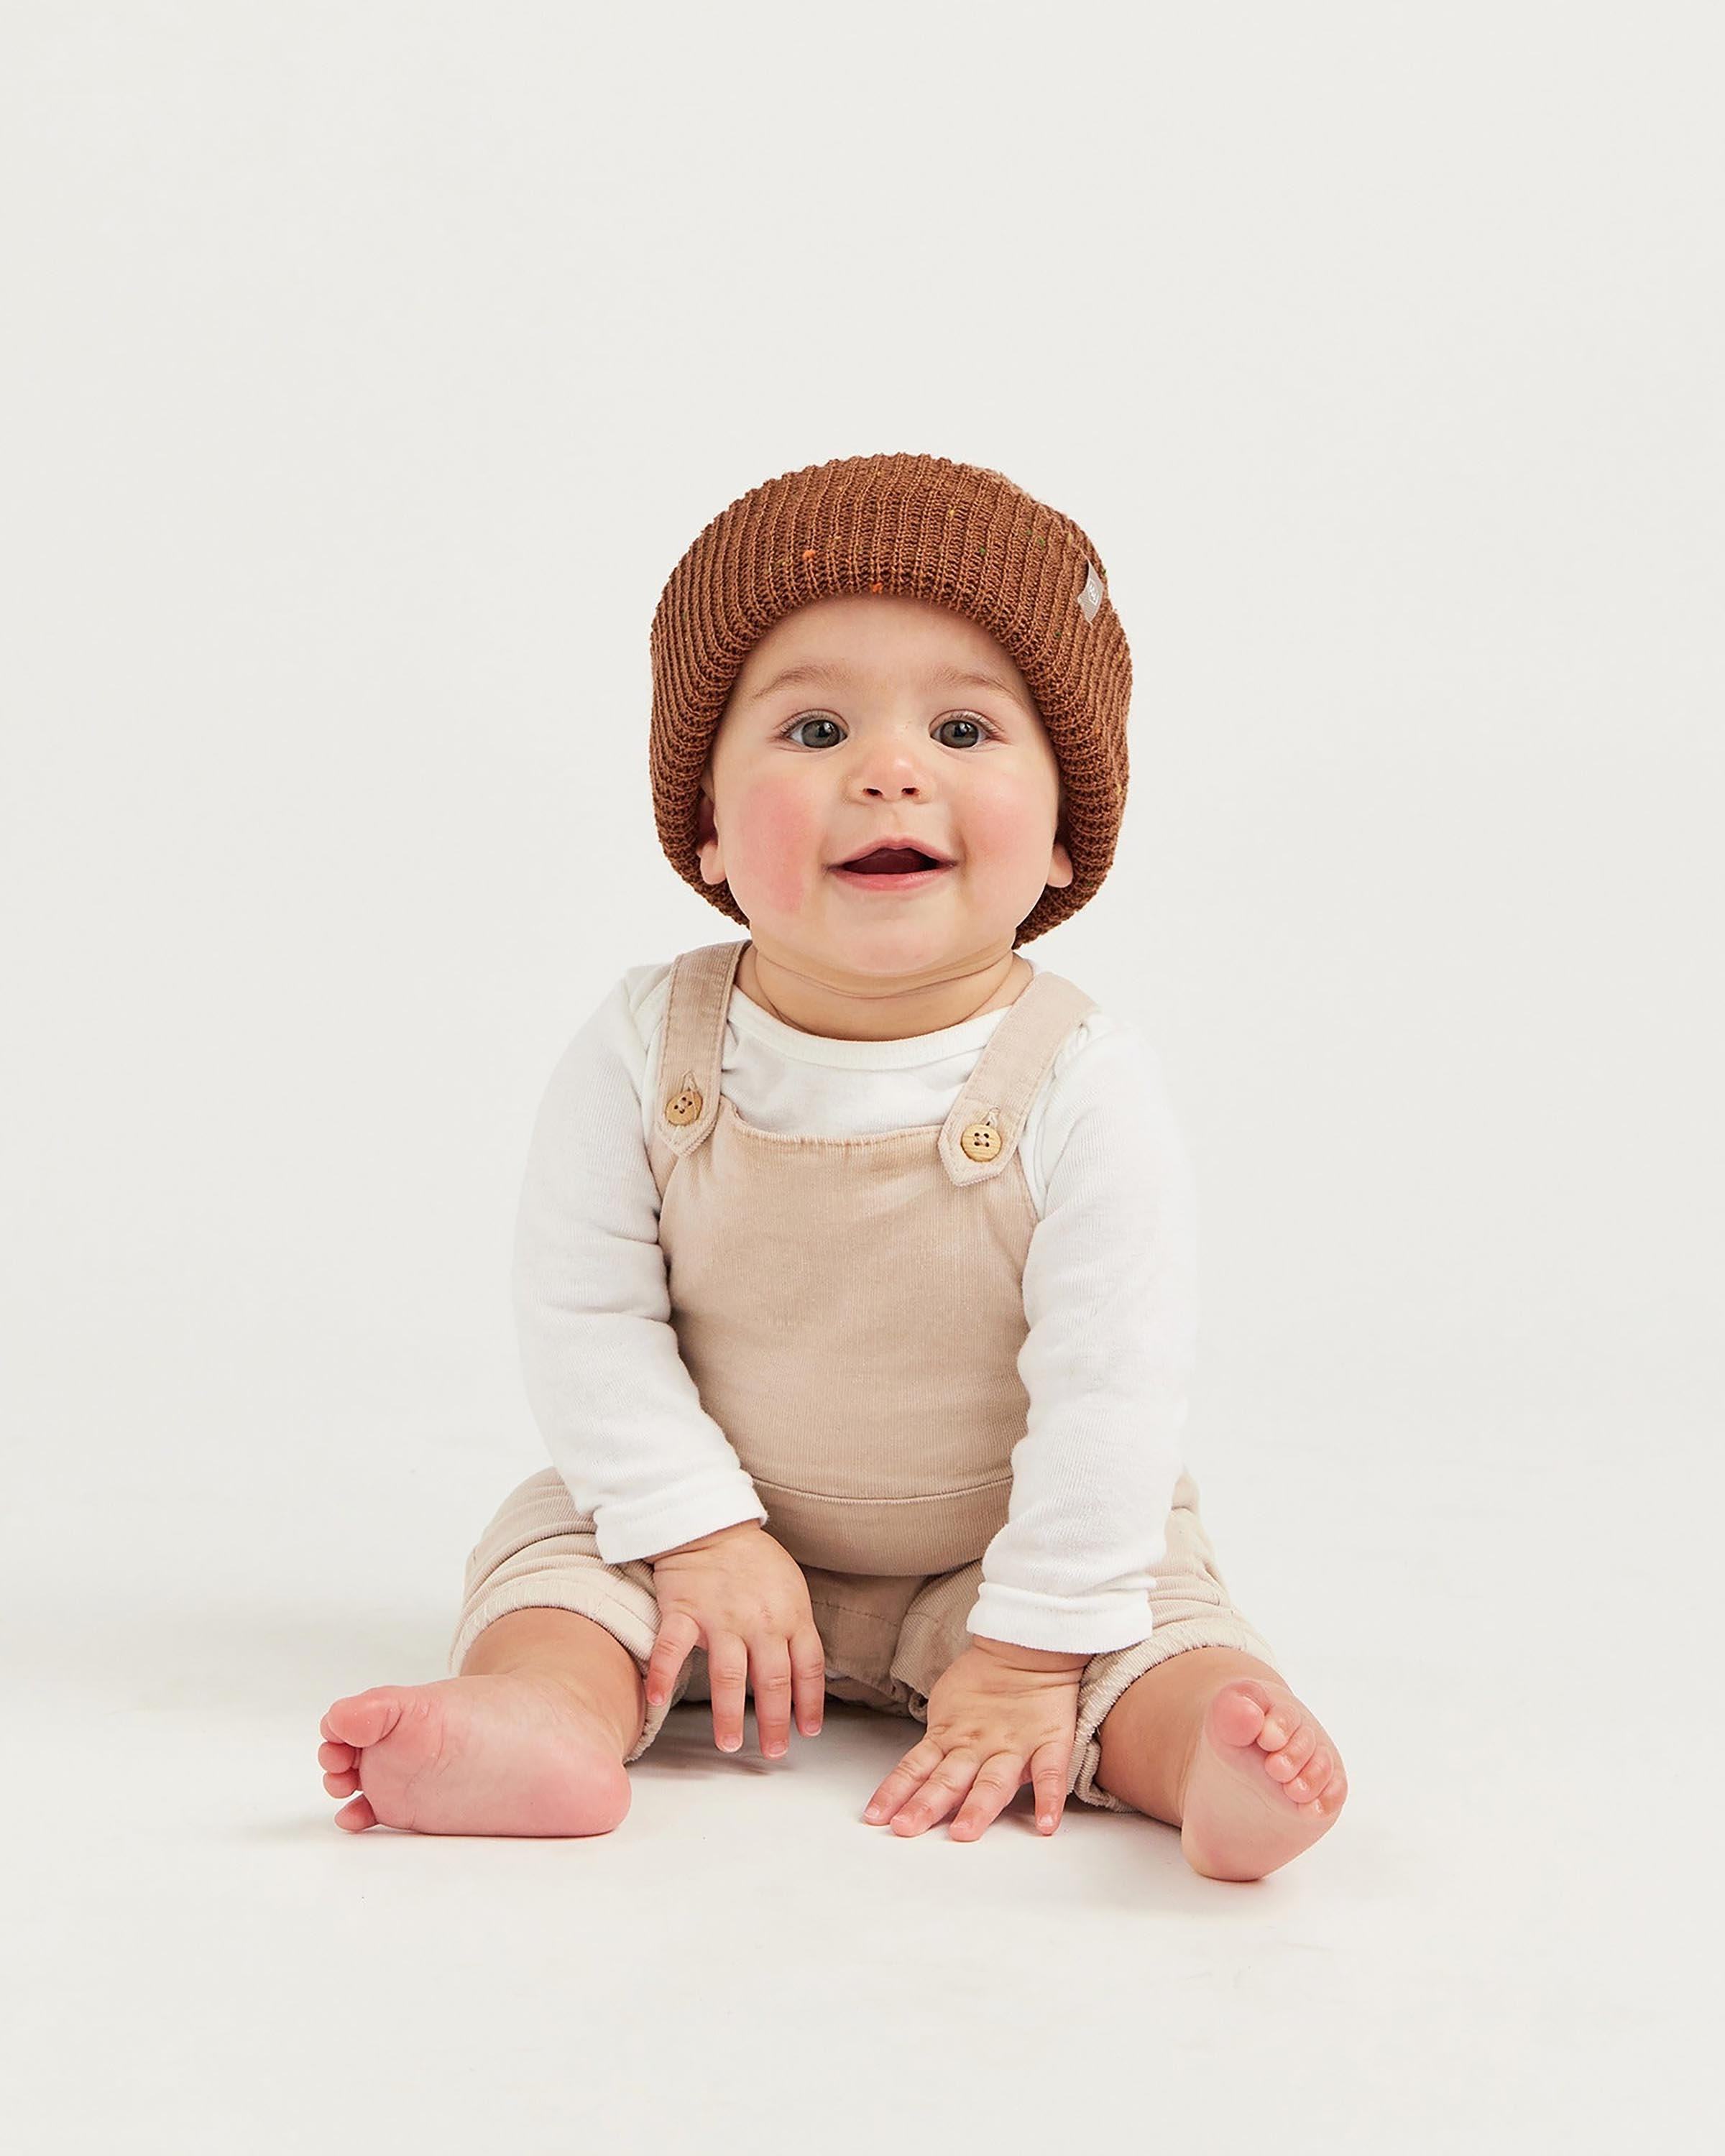 Baby Ranger Beanie in Camel Fleck - undefined - Hemlock Hat Co. Beanies - Baby